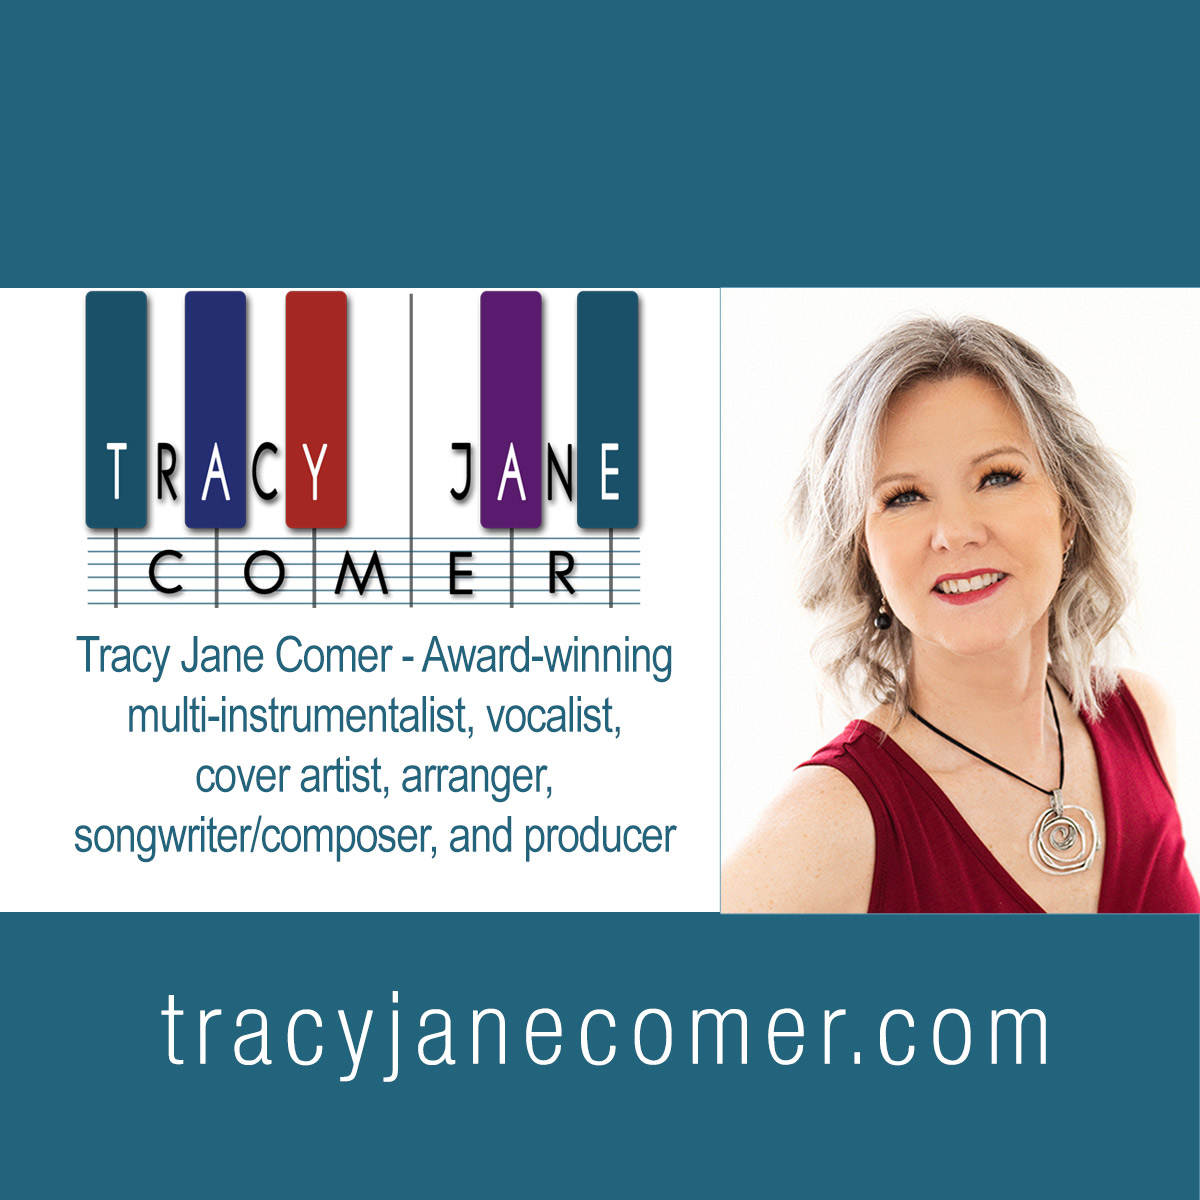 (c) Tracycomer.com